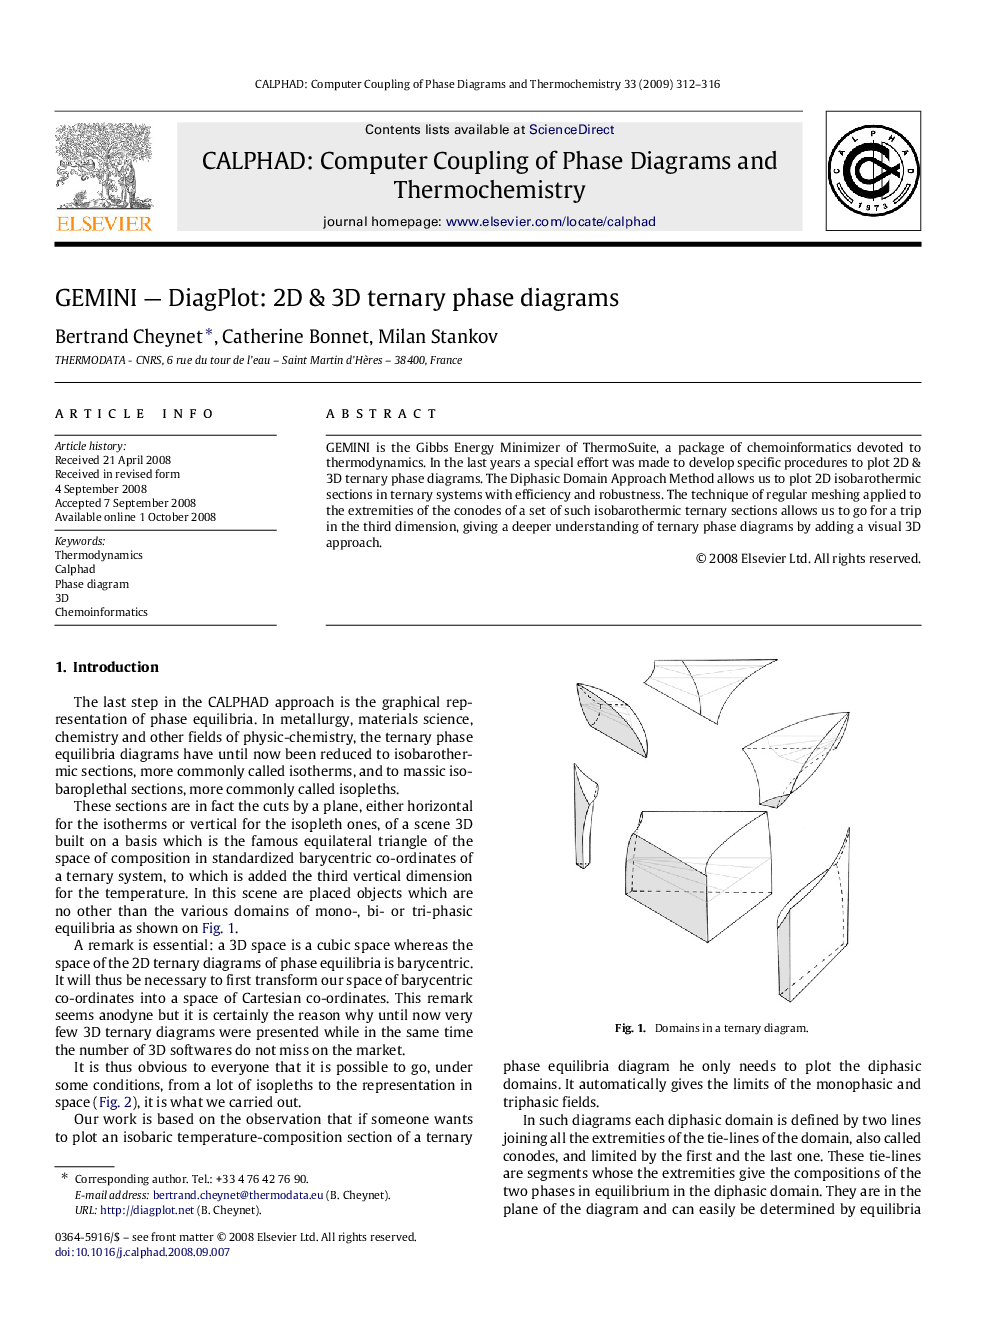 GEMINI — DiagPlot: 2D & 3D ternary phase diagrams